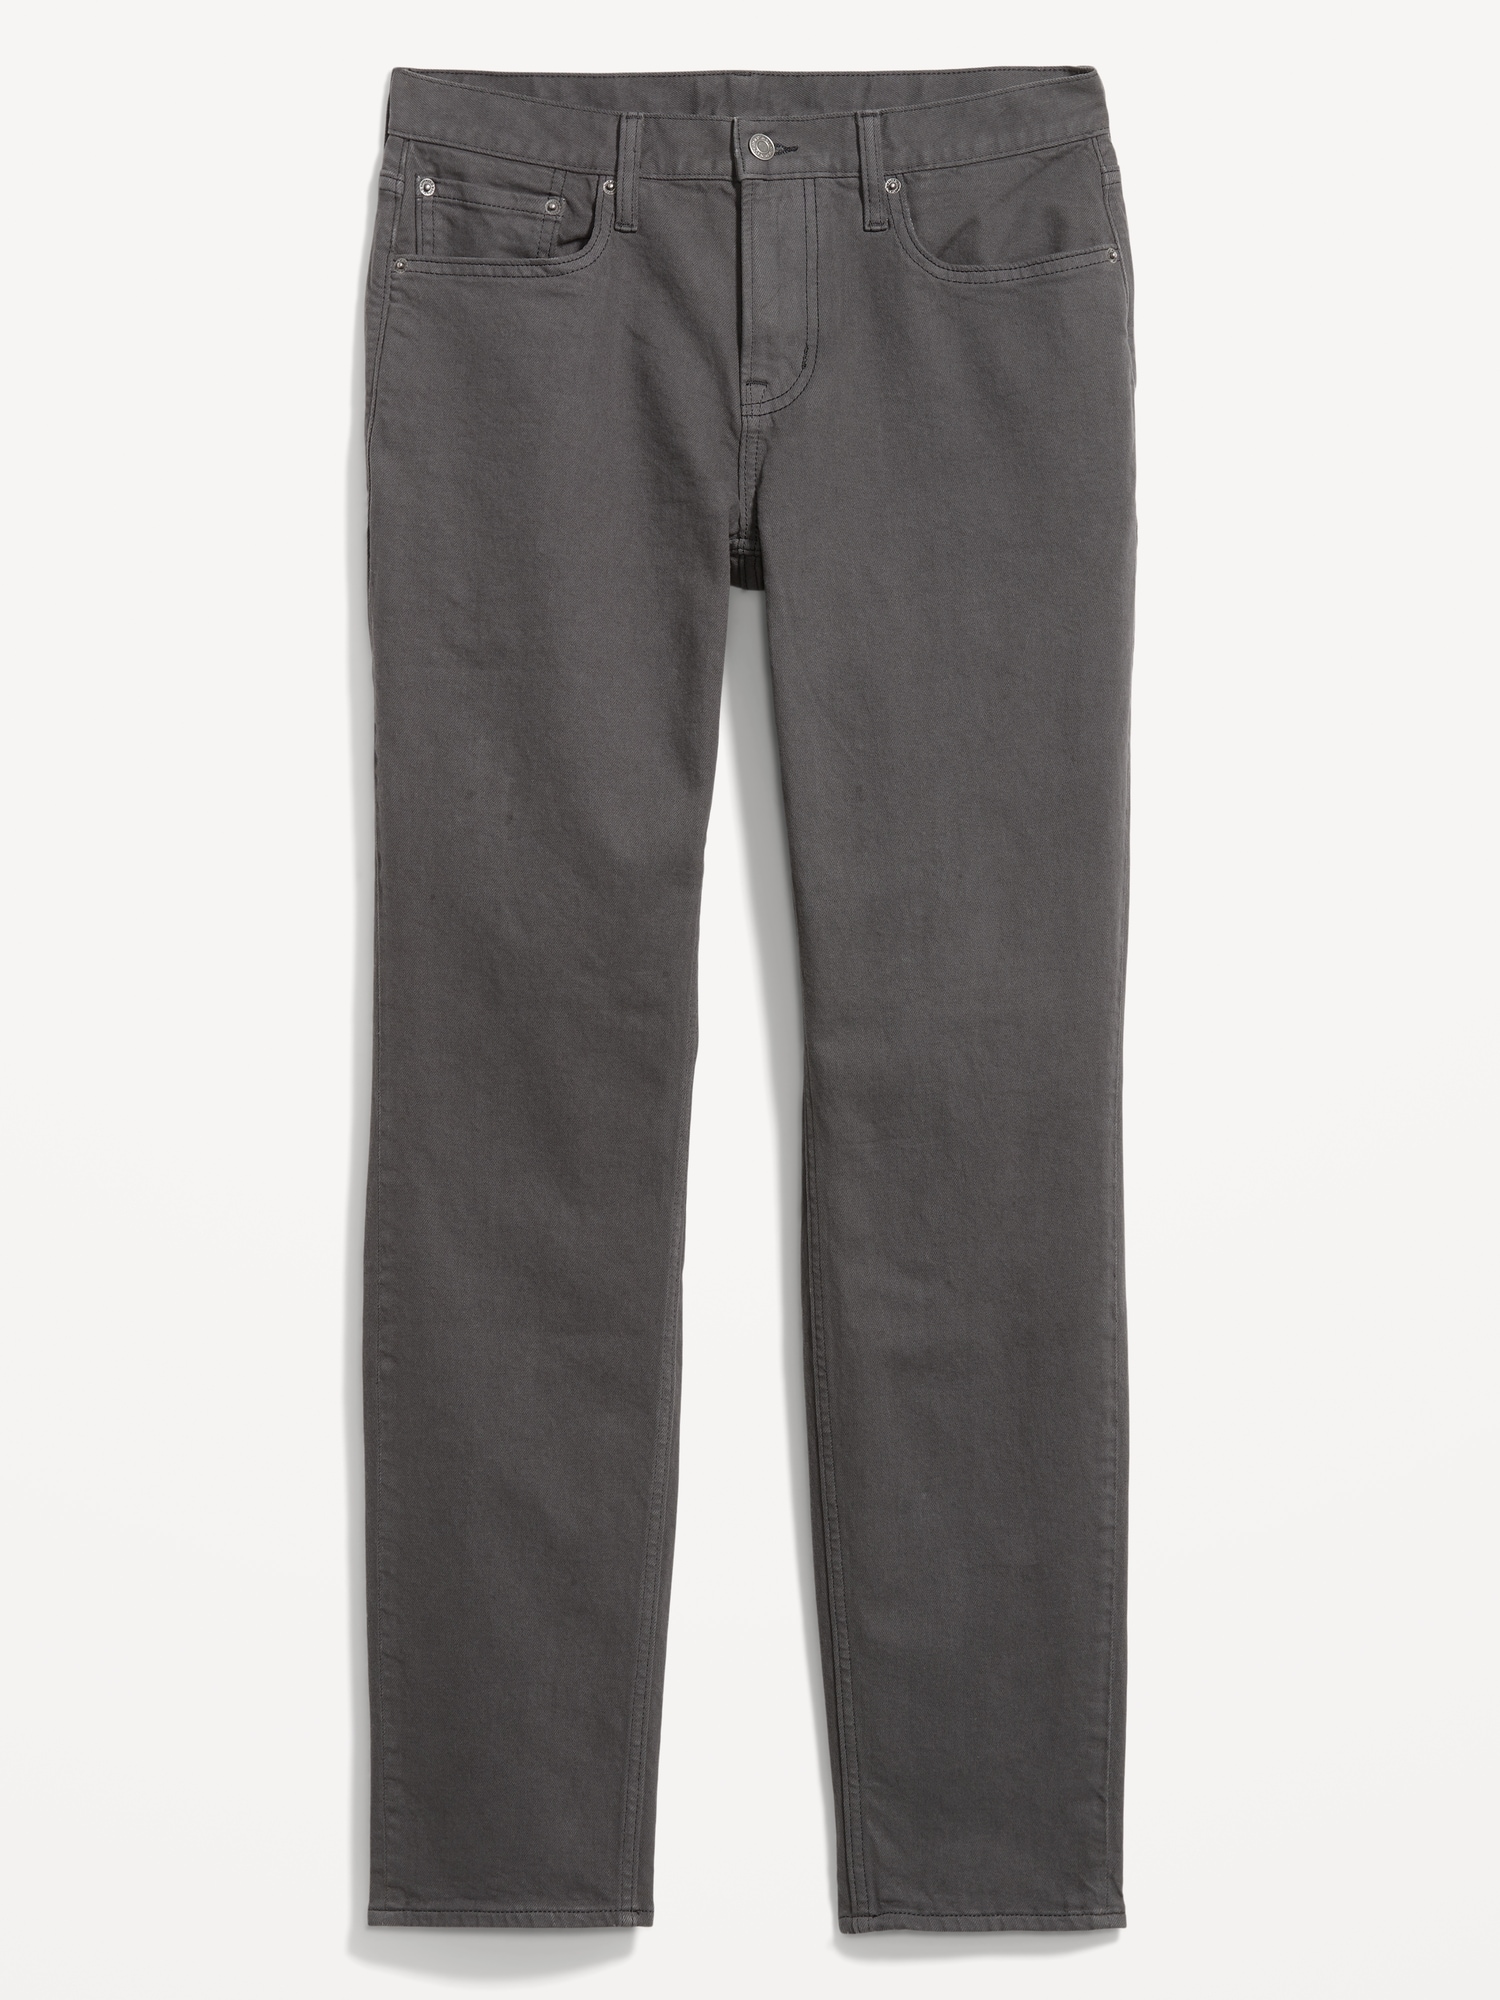 Athletic Taper Five-Pocket Pants | Old Navy